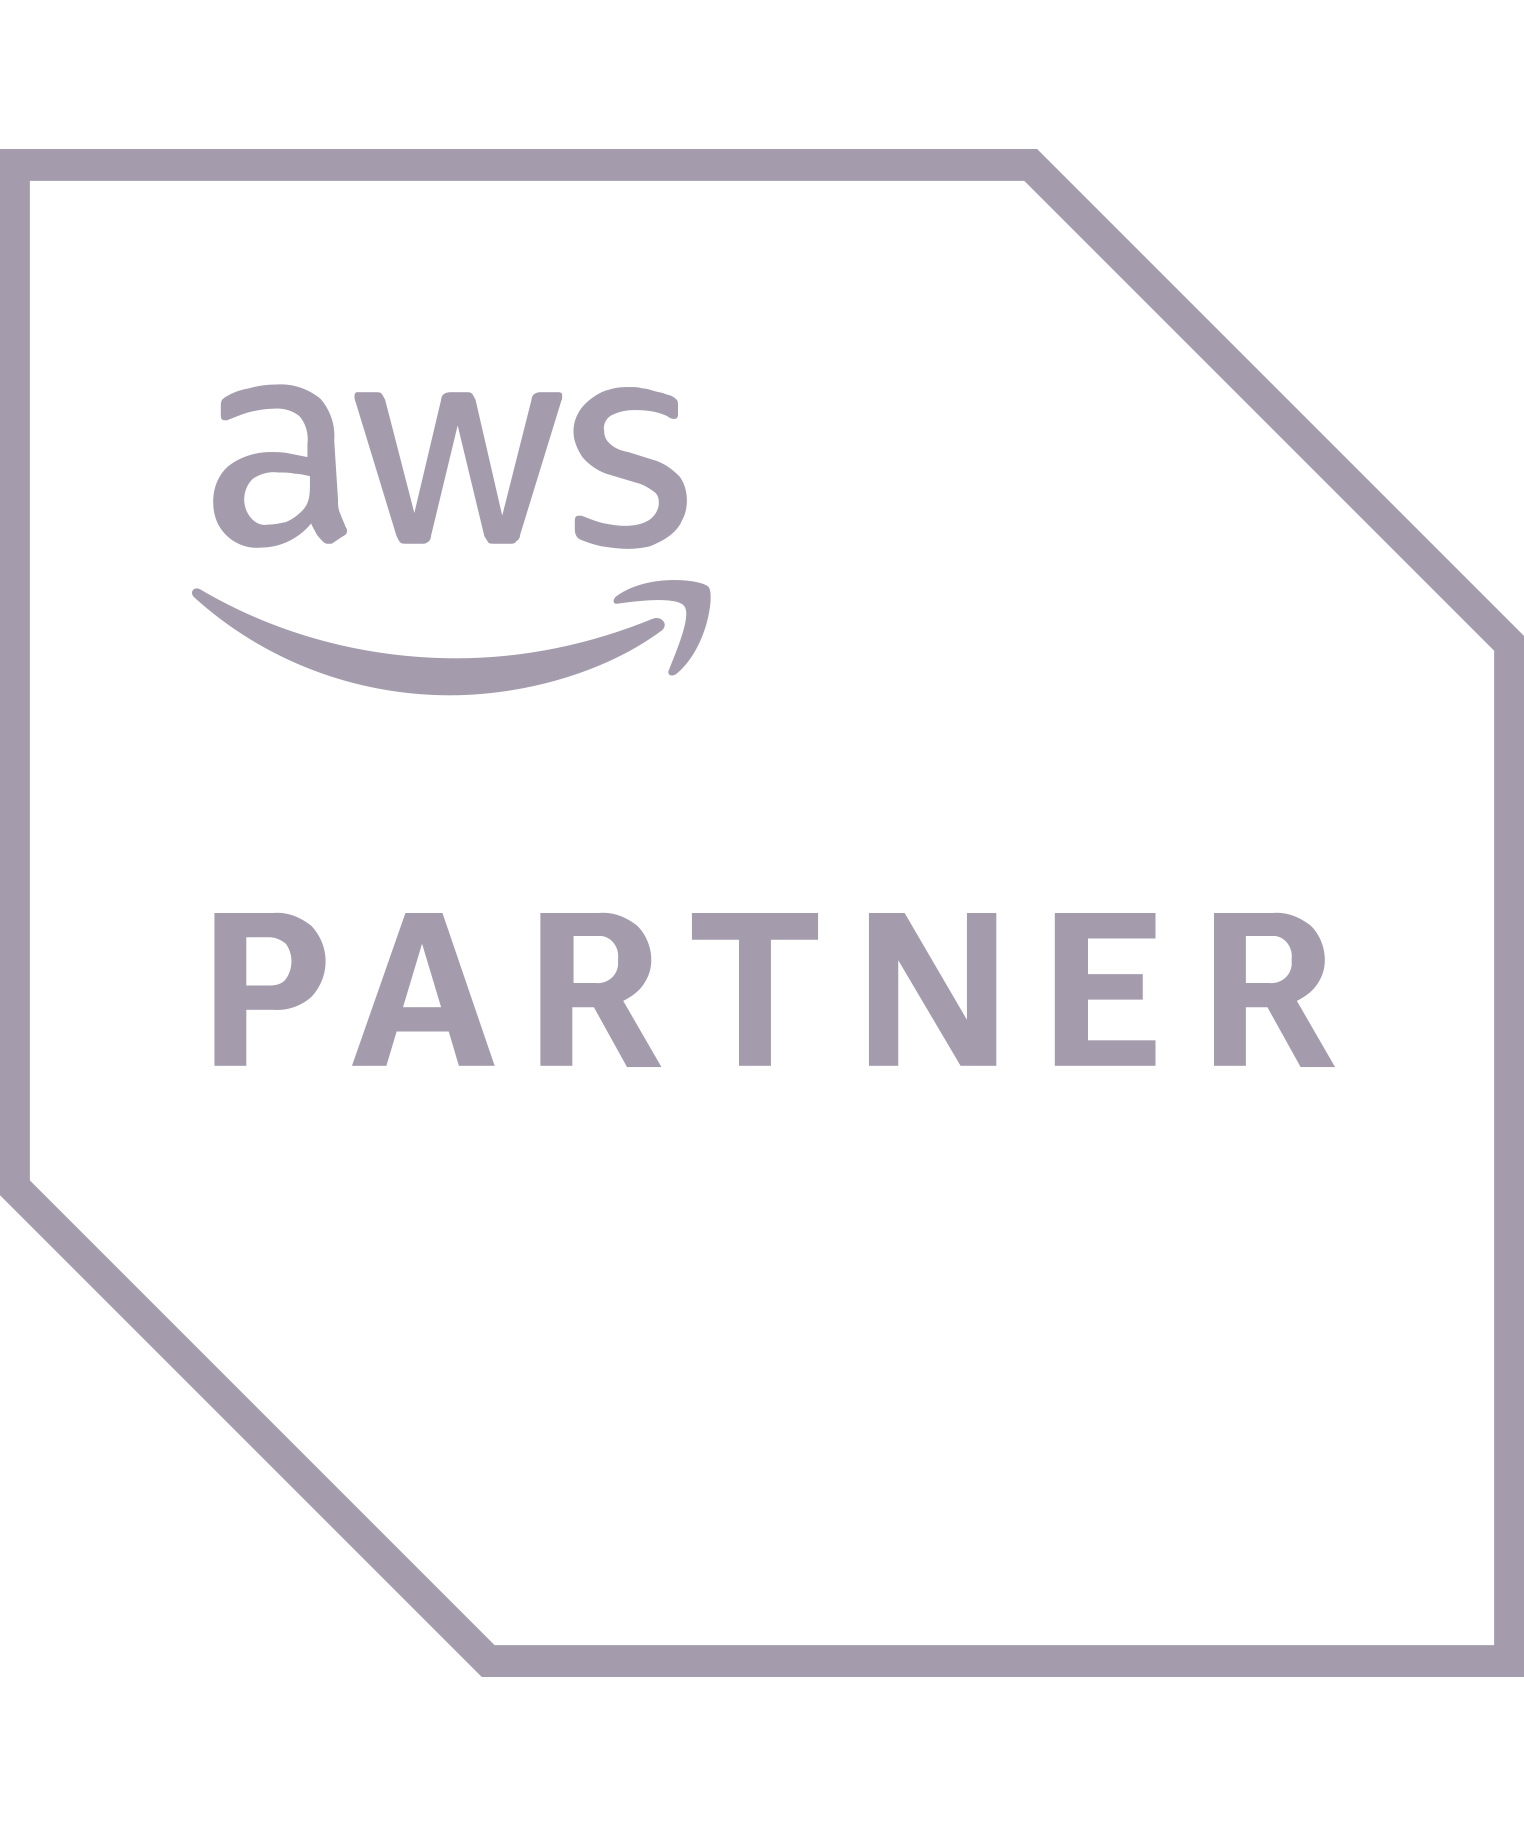 AWS Partner Badge - Ionburst is an AWS Advanced Technology Partner.